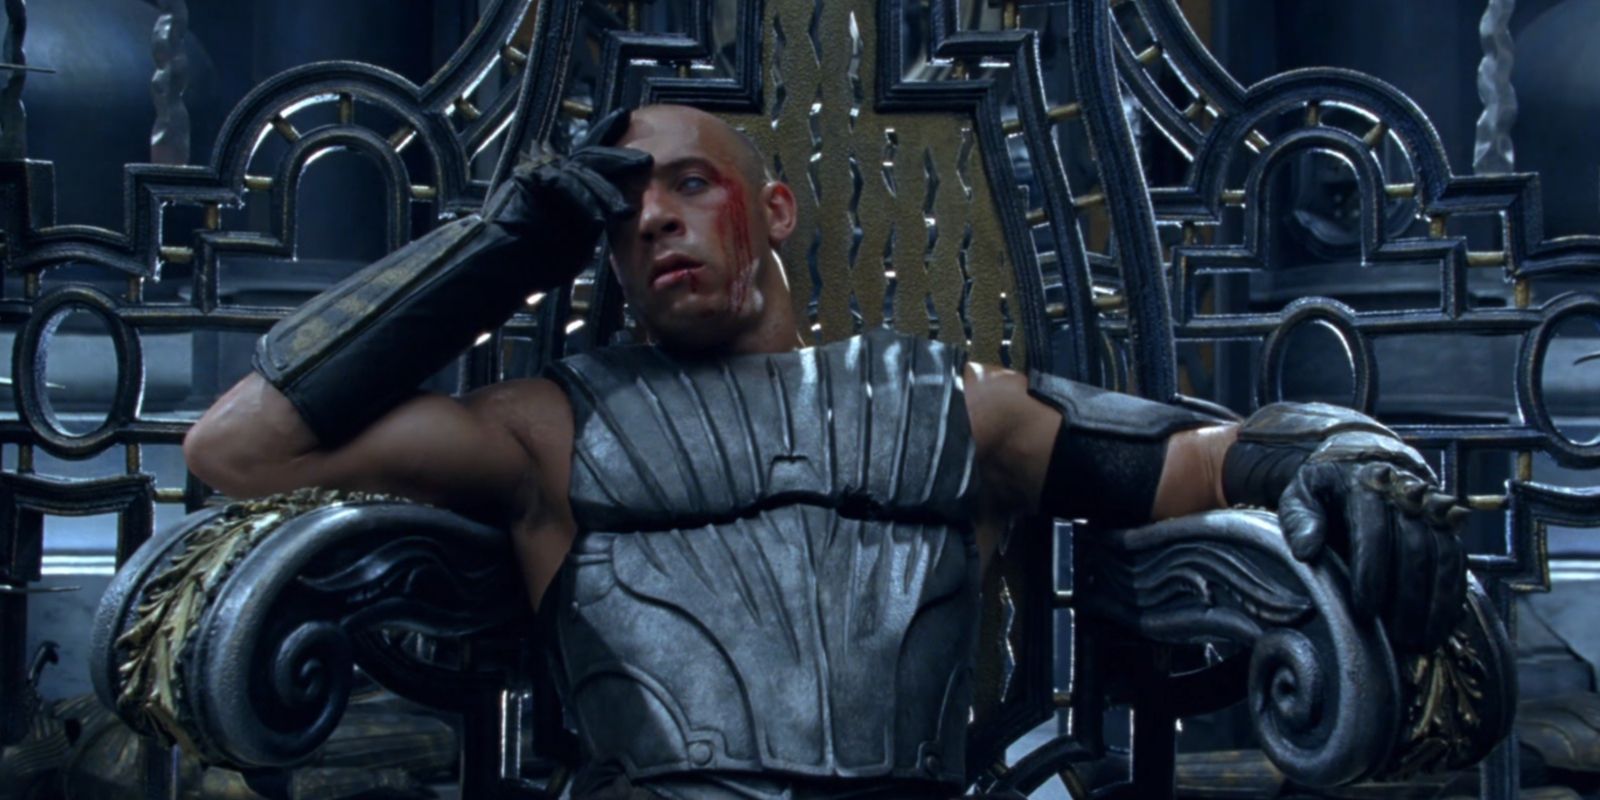 Riddick claiming the Necromonger throne in The Chronicles Of Riddick